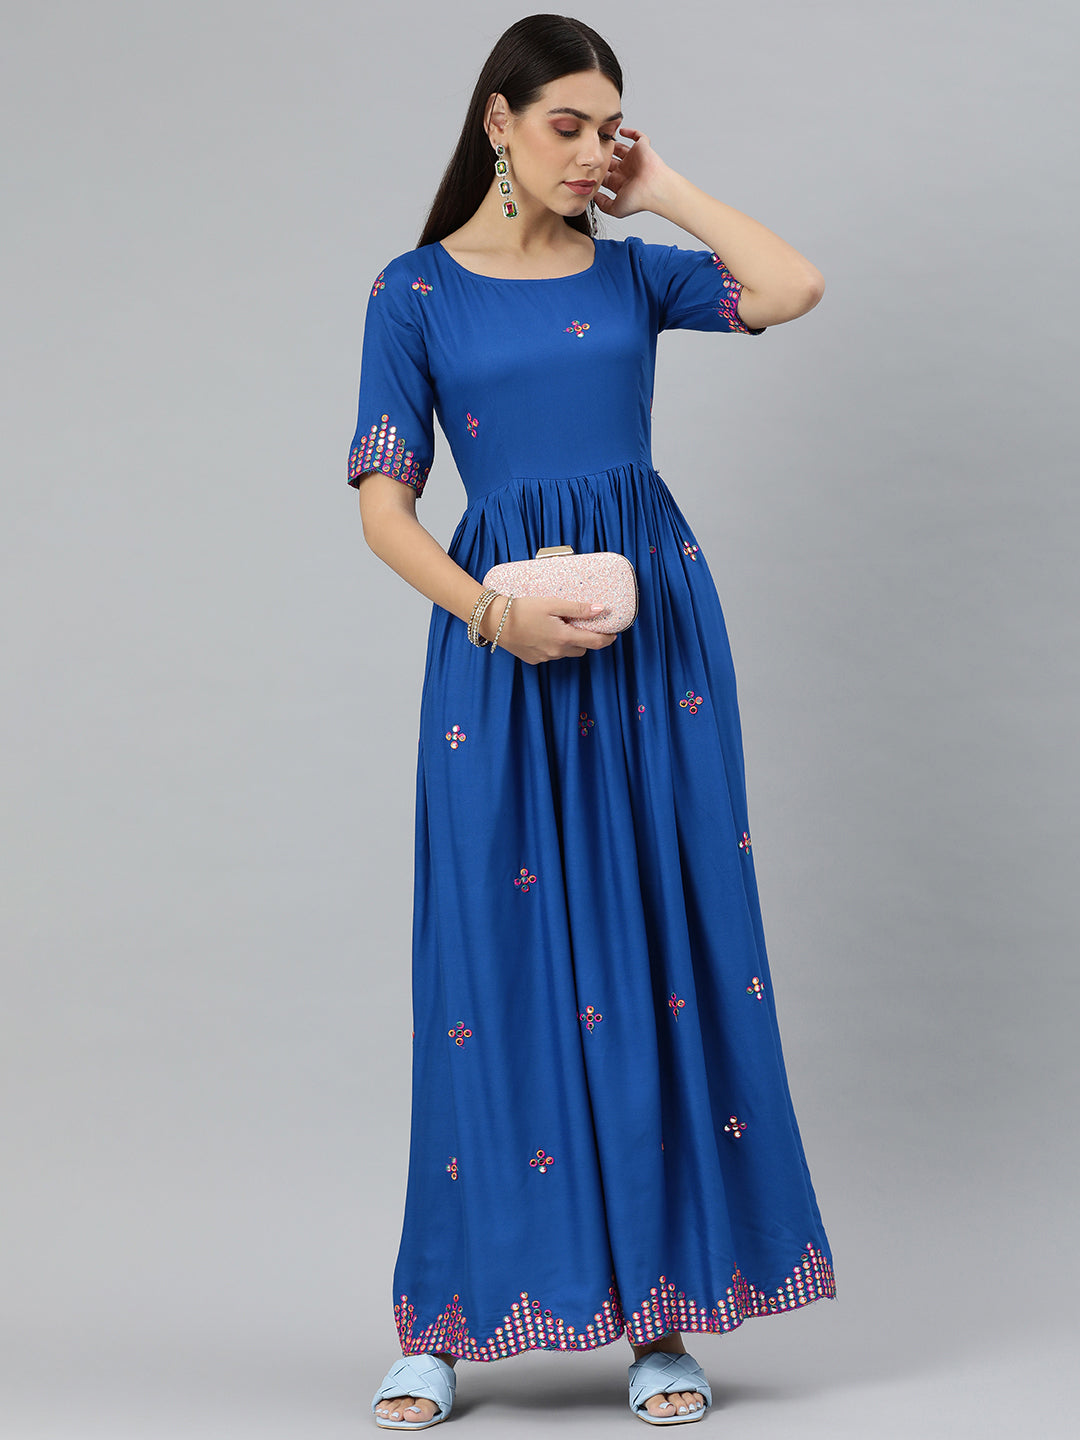 Buy HELLO DESIGN Women Beige Frill Maxi Dress at Amazon.in